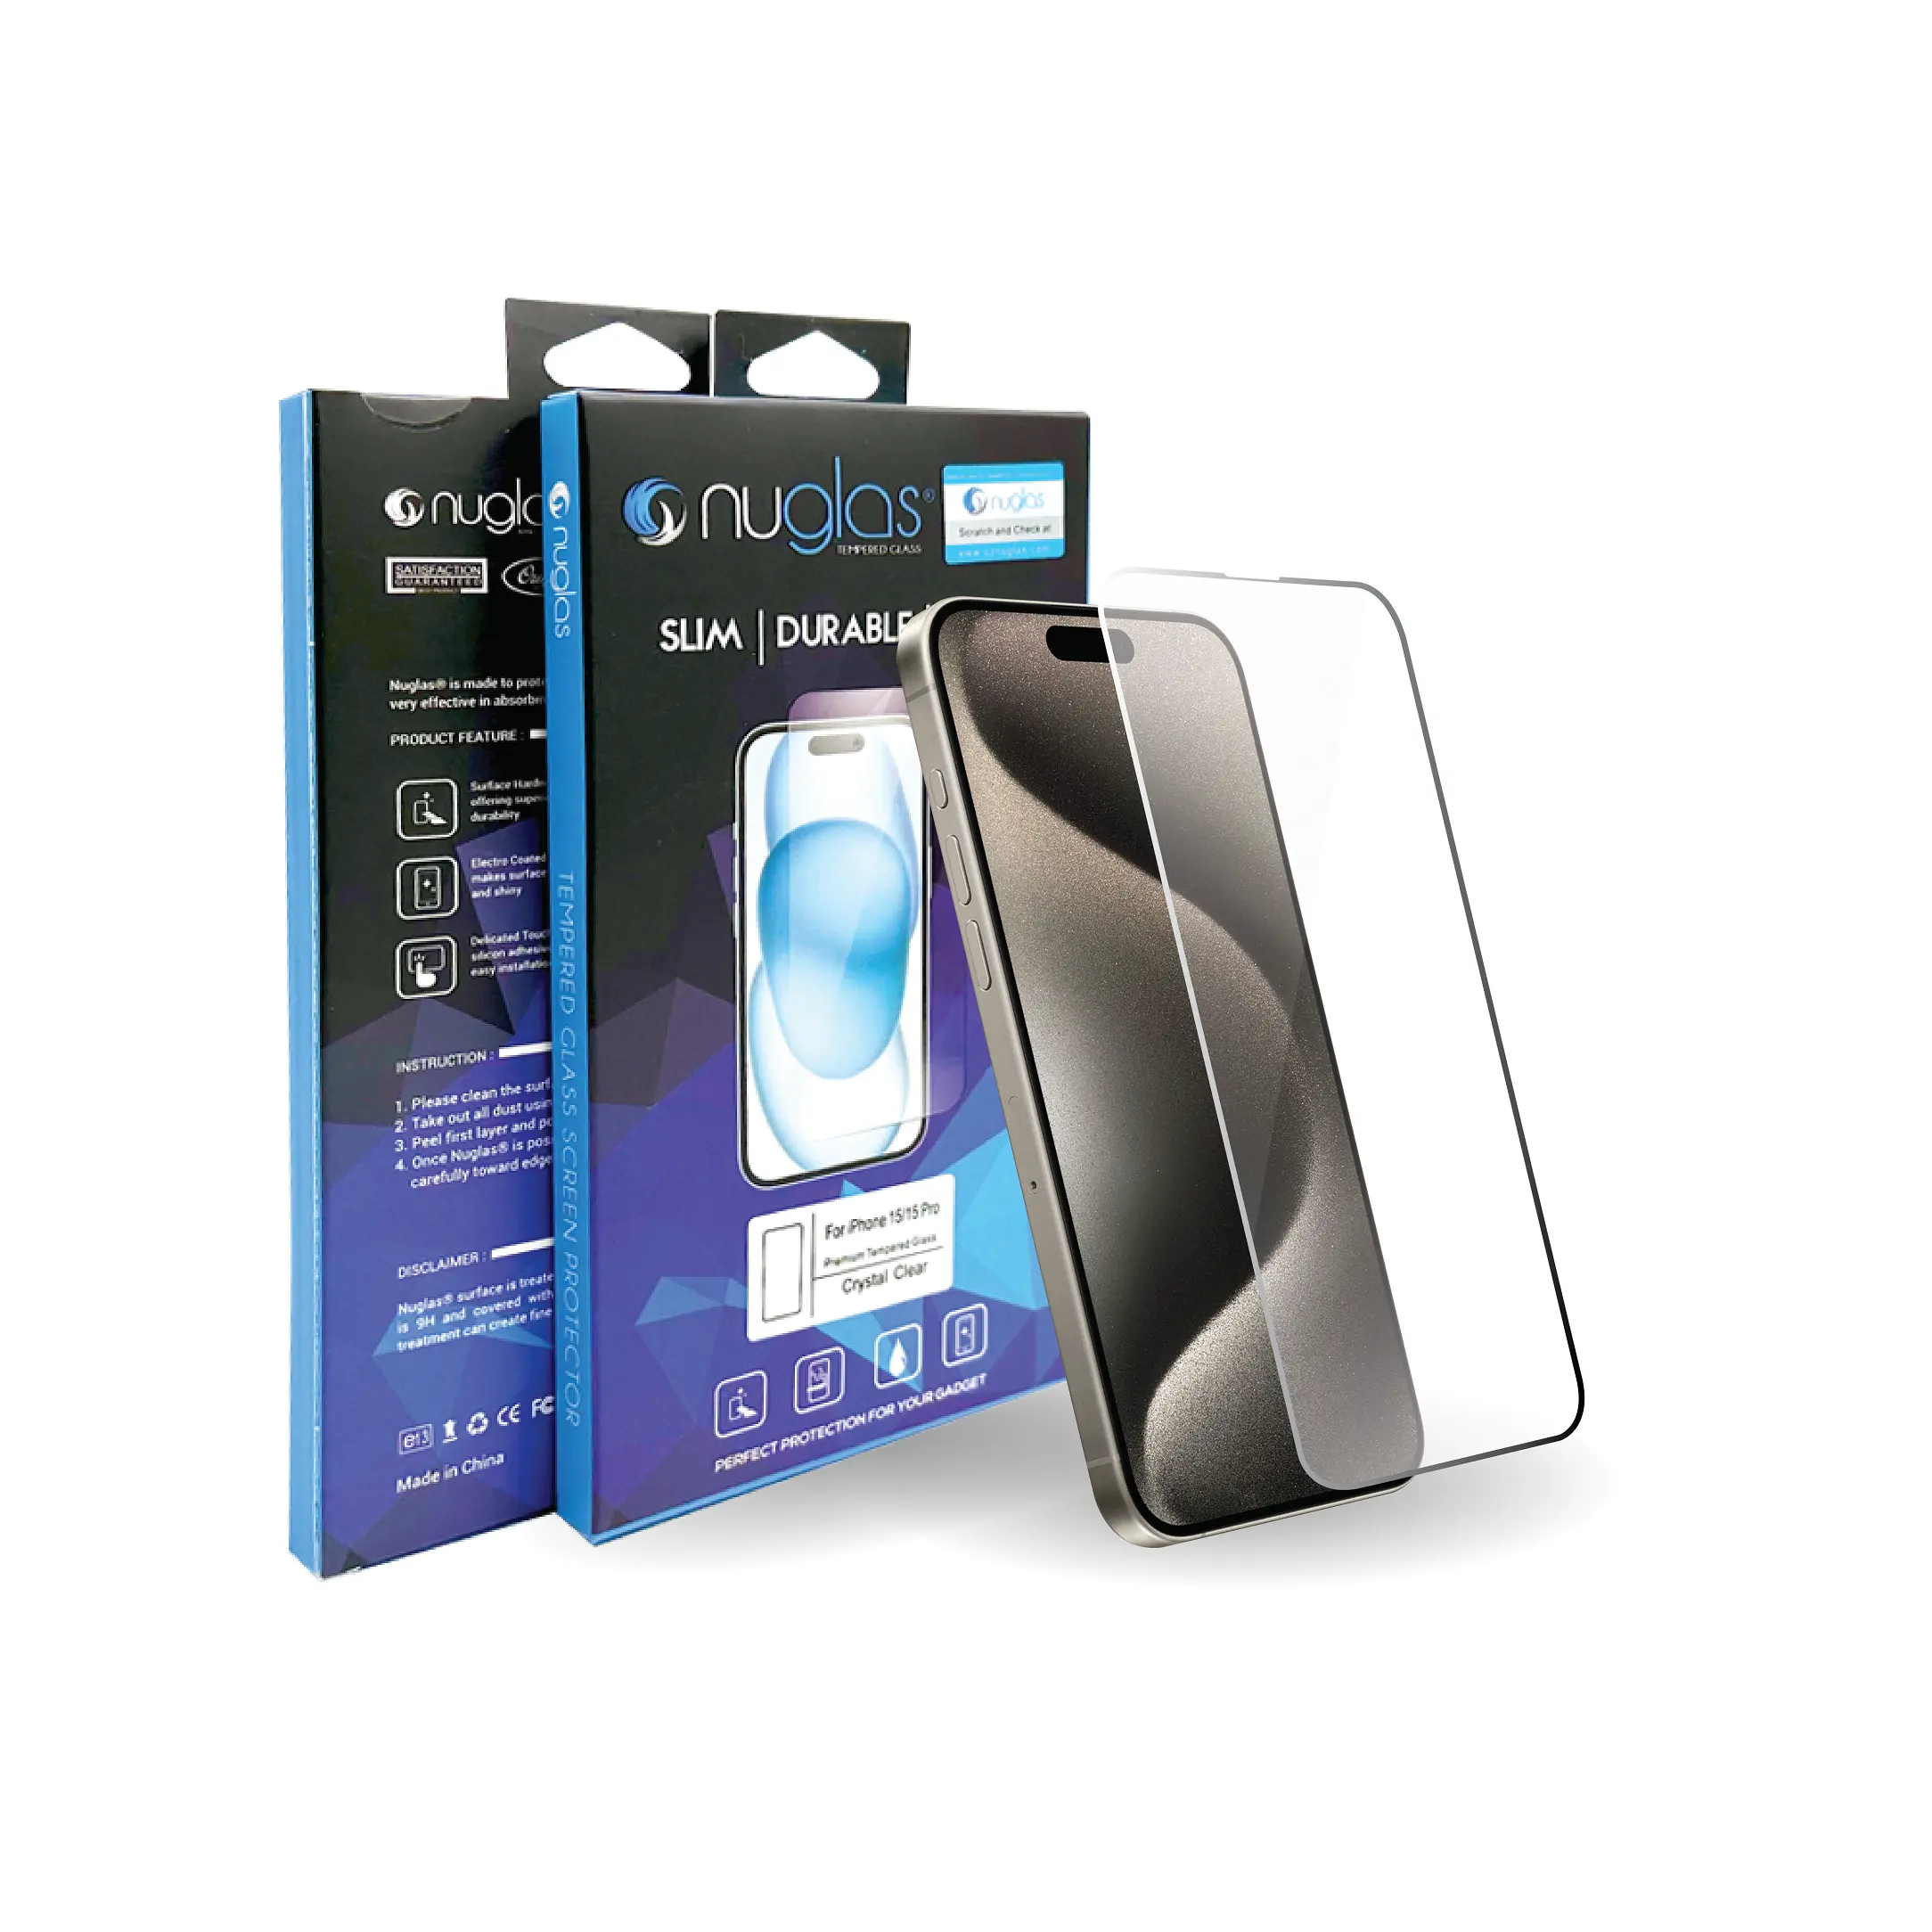 Premium irrompible a prueba de golpes libre de polvo HD 9h 2.5d teléfono celular a granel al por mayor protector de pantalla de vidrio templado transparente